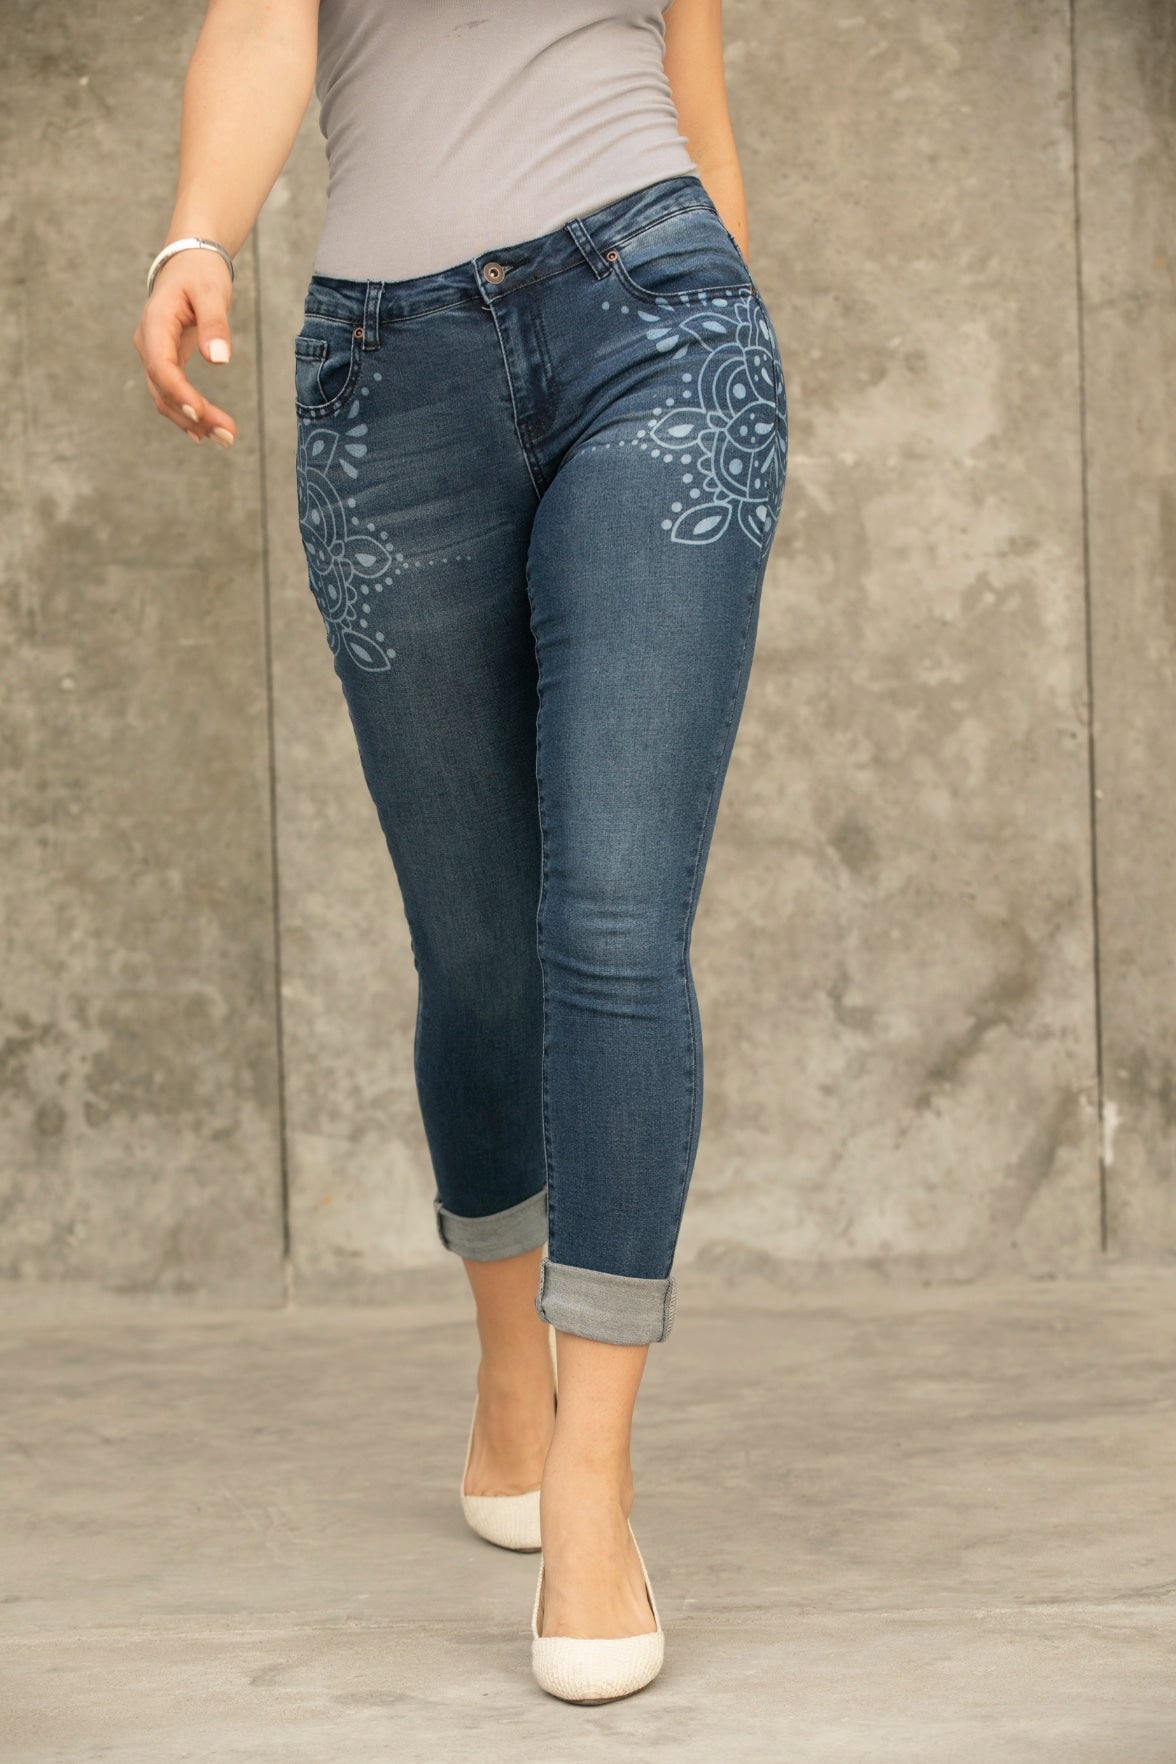 Tiffany's Printed Denim Jeans